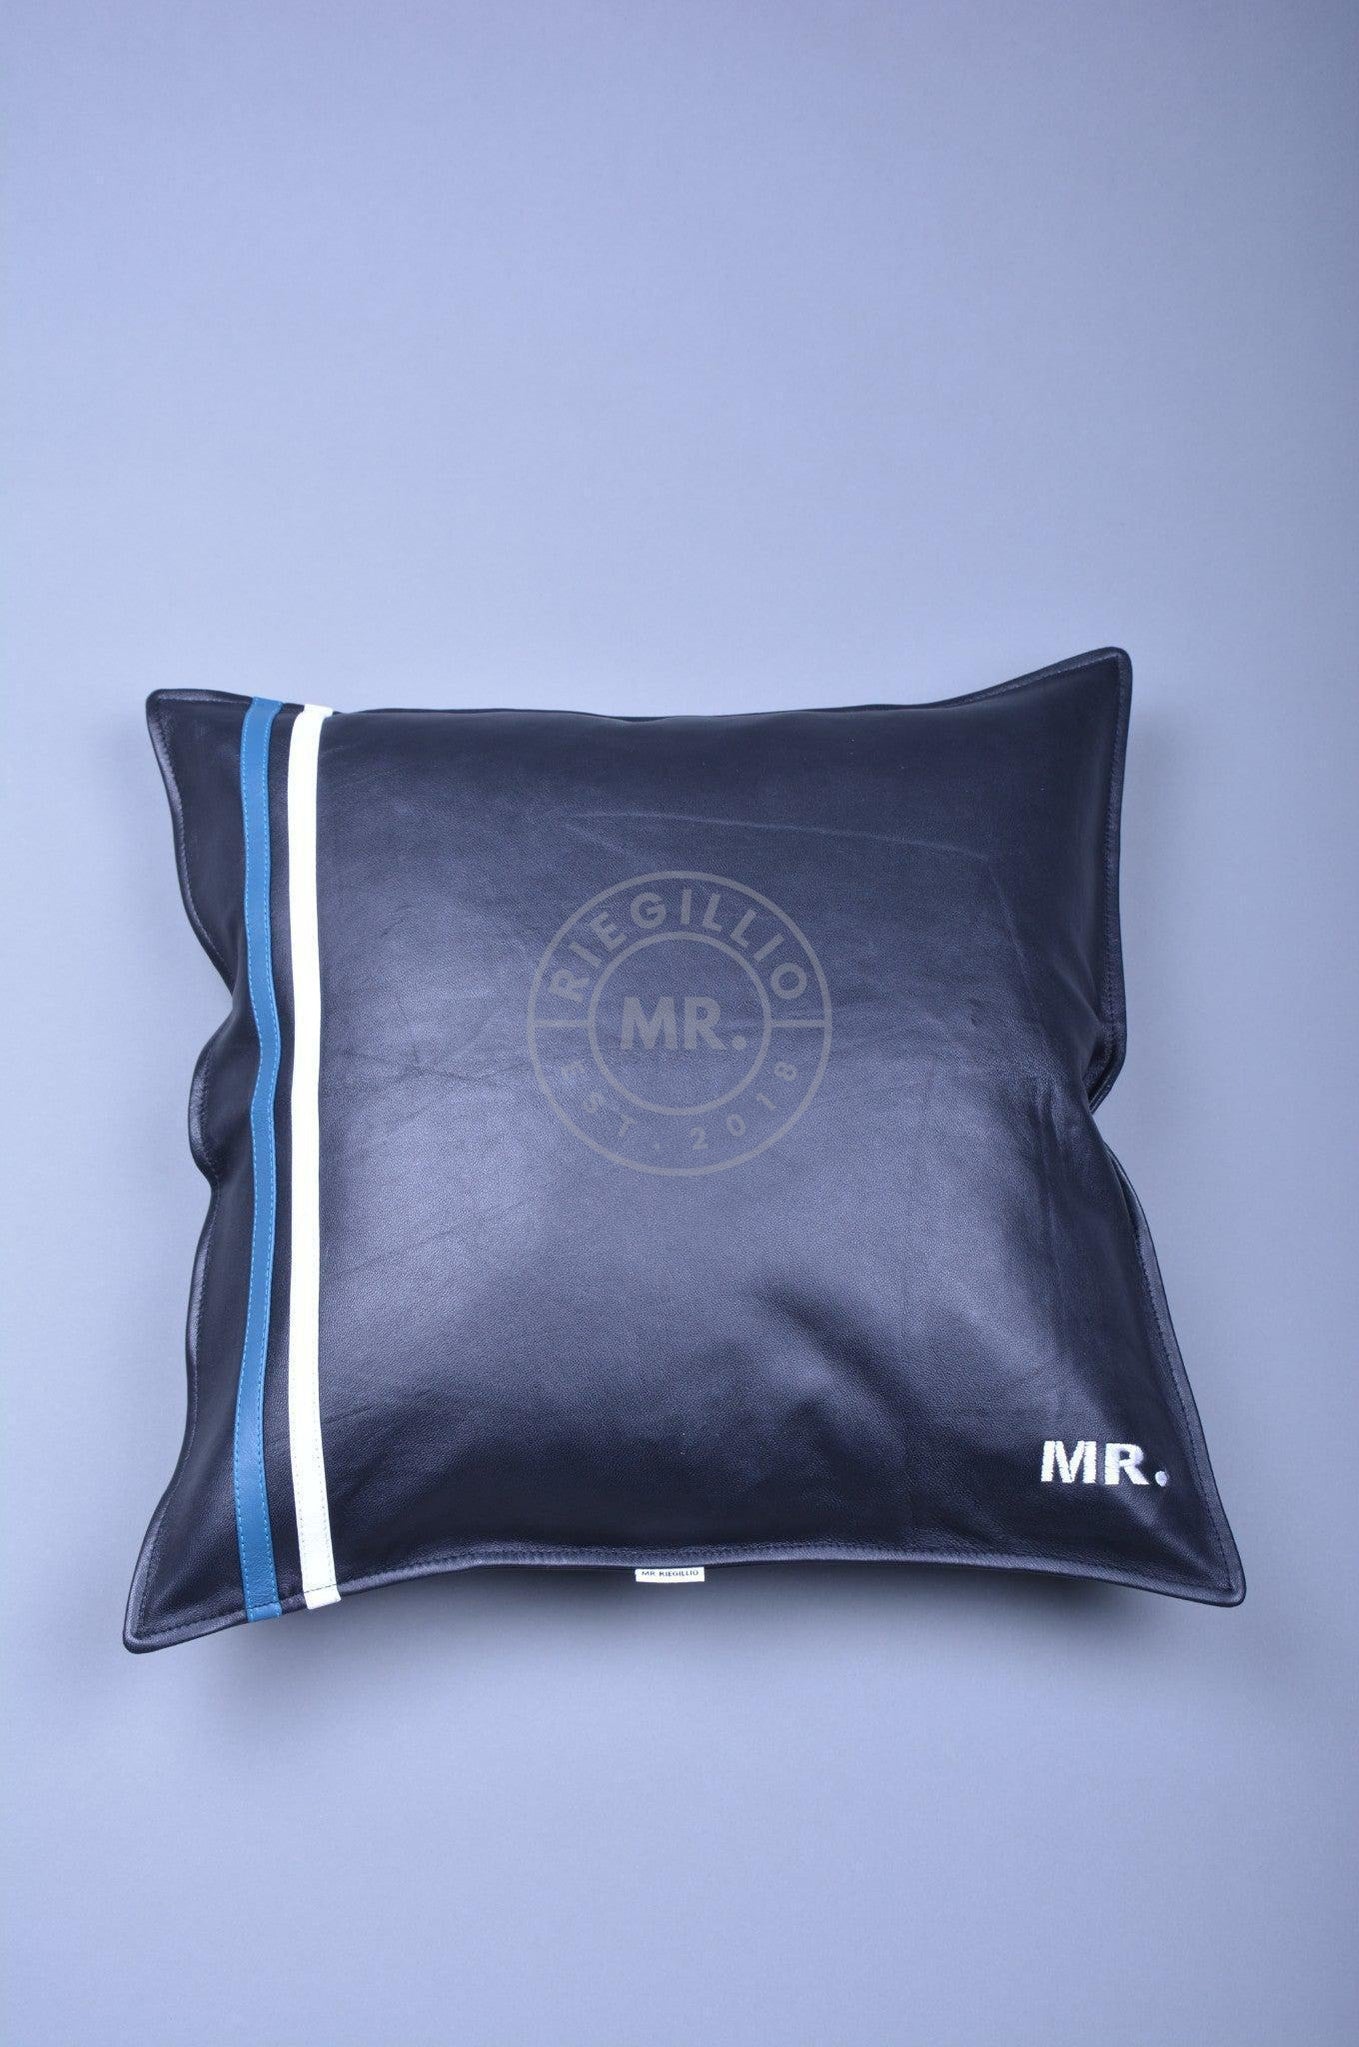 Black Leather Pillow - Jeans Blue Stripe at MR. Riegillio